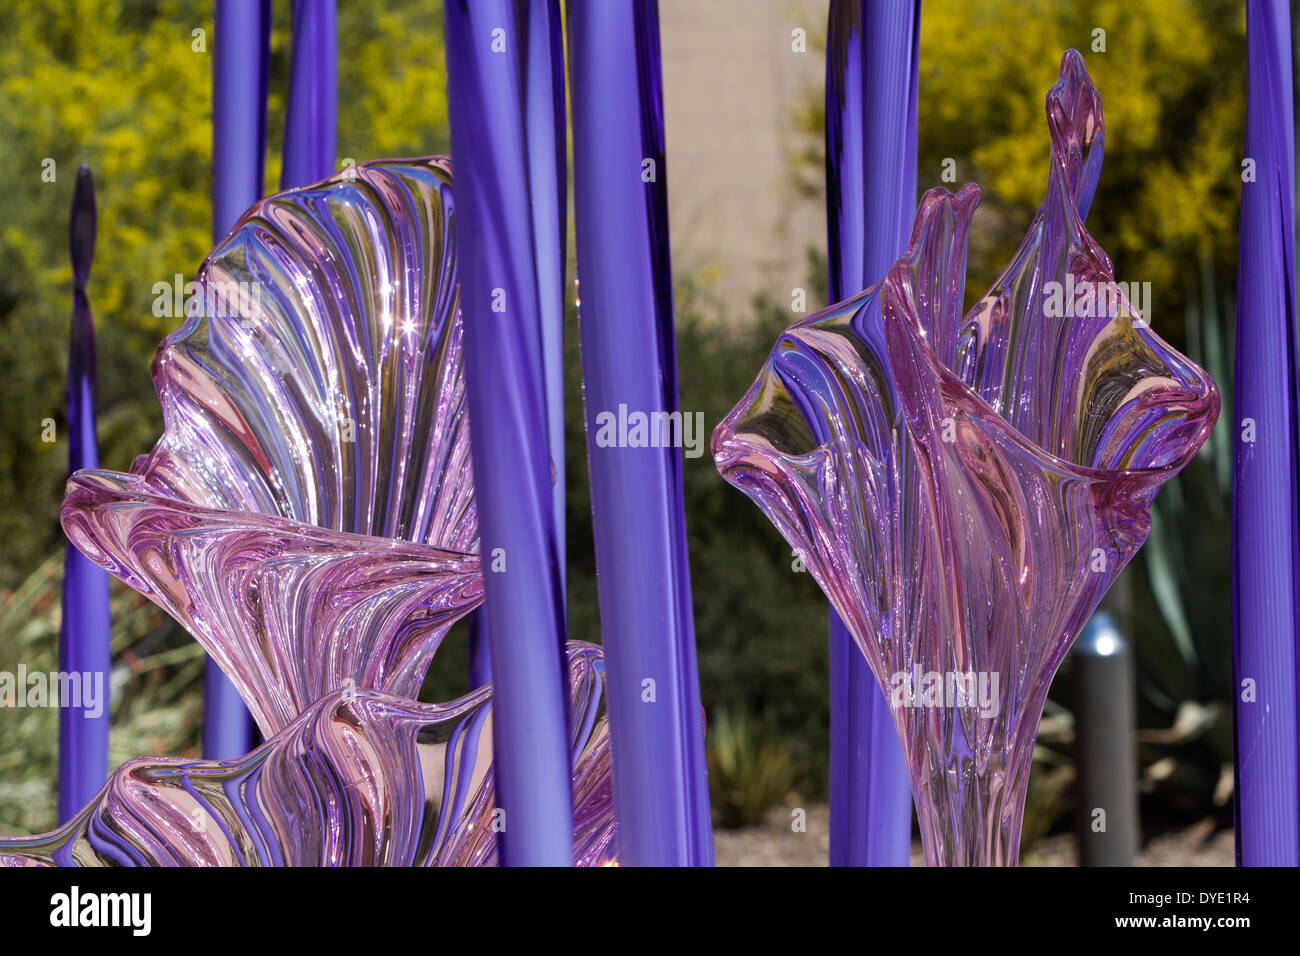 Glass sculpture, Desert Botanical Gardens, Phoenix, Arizona, USA Stock Photo